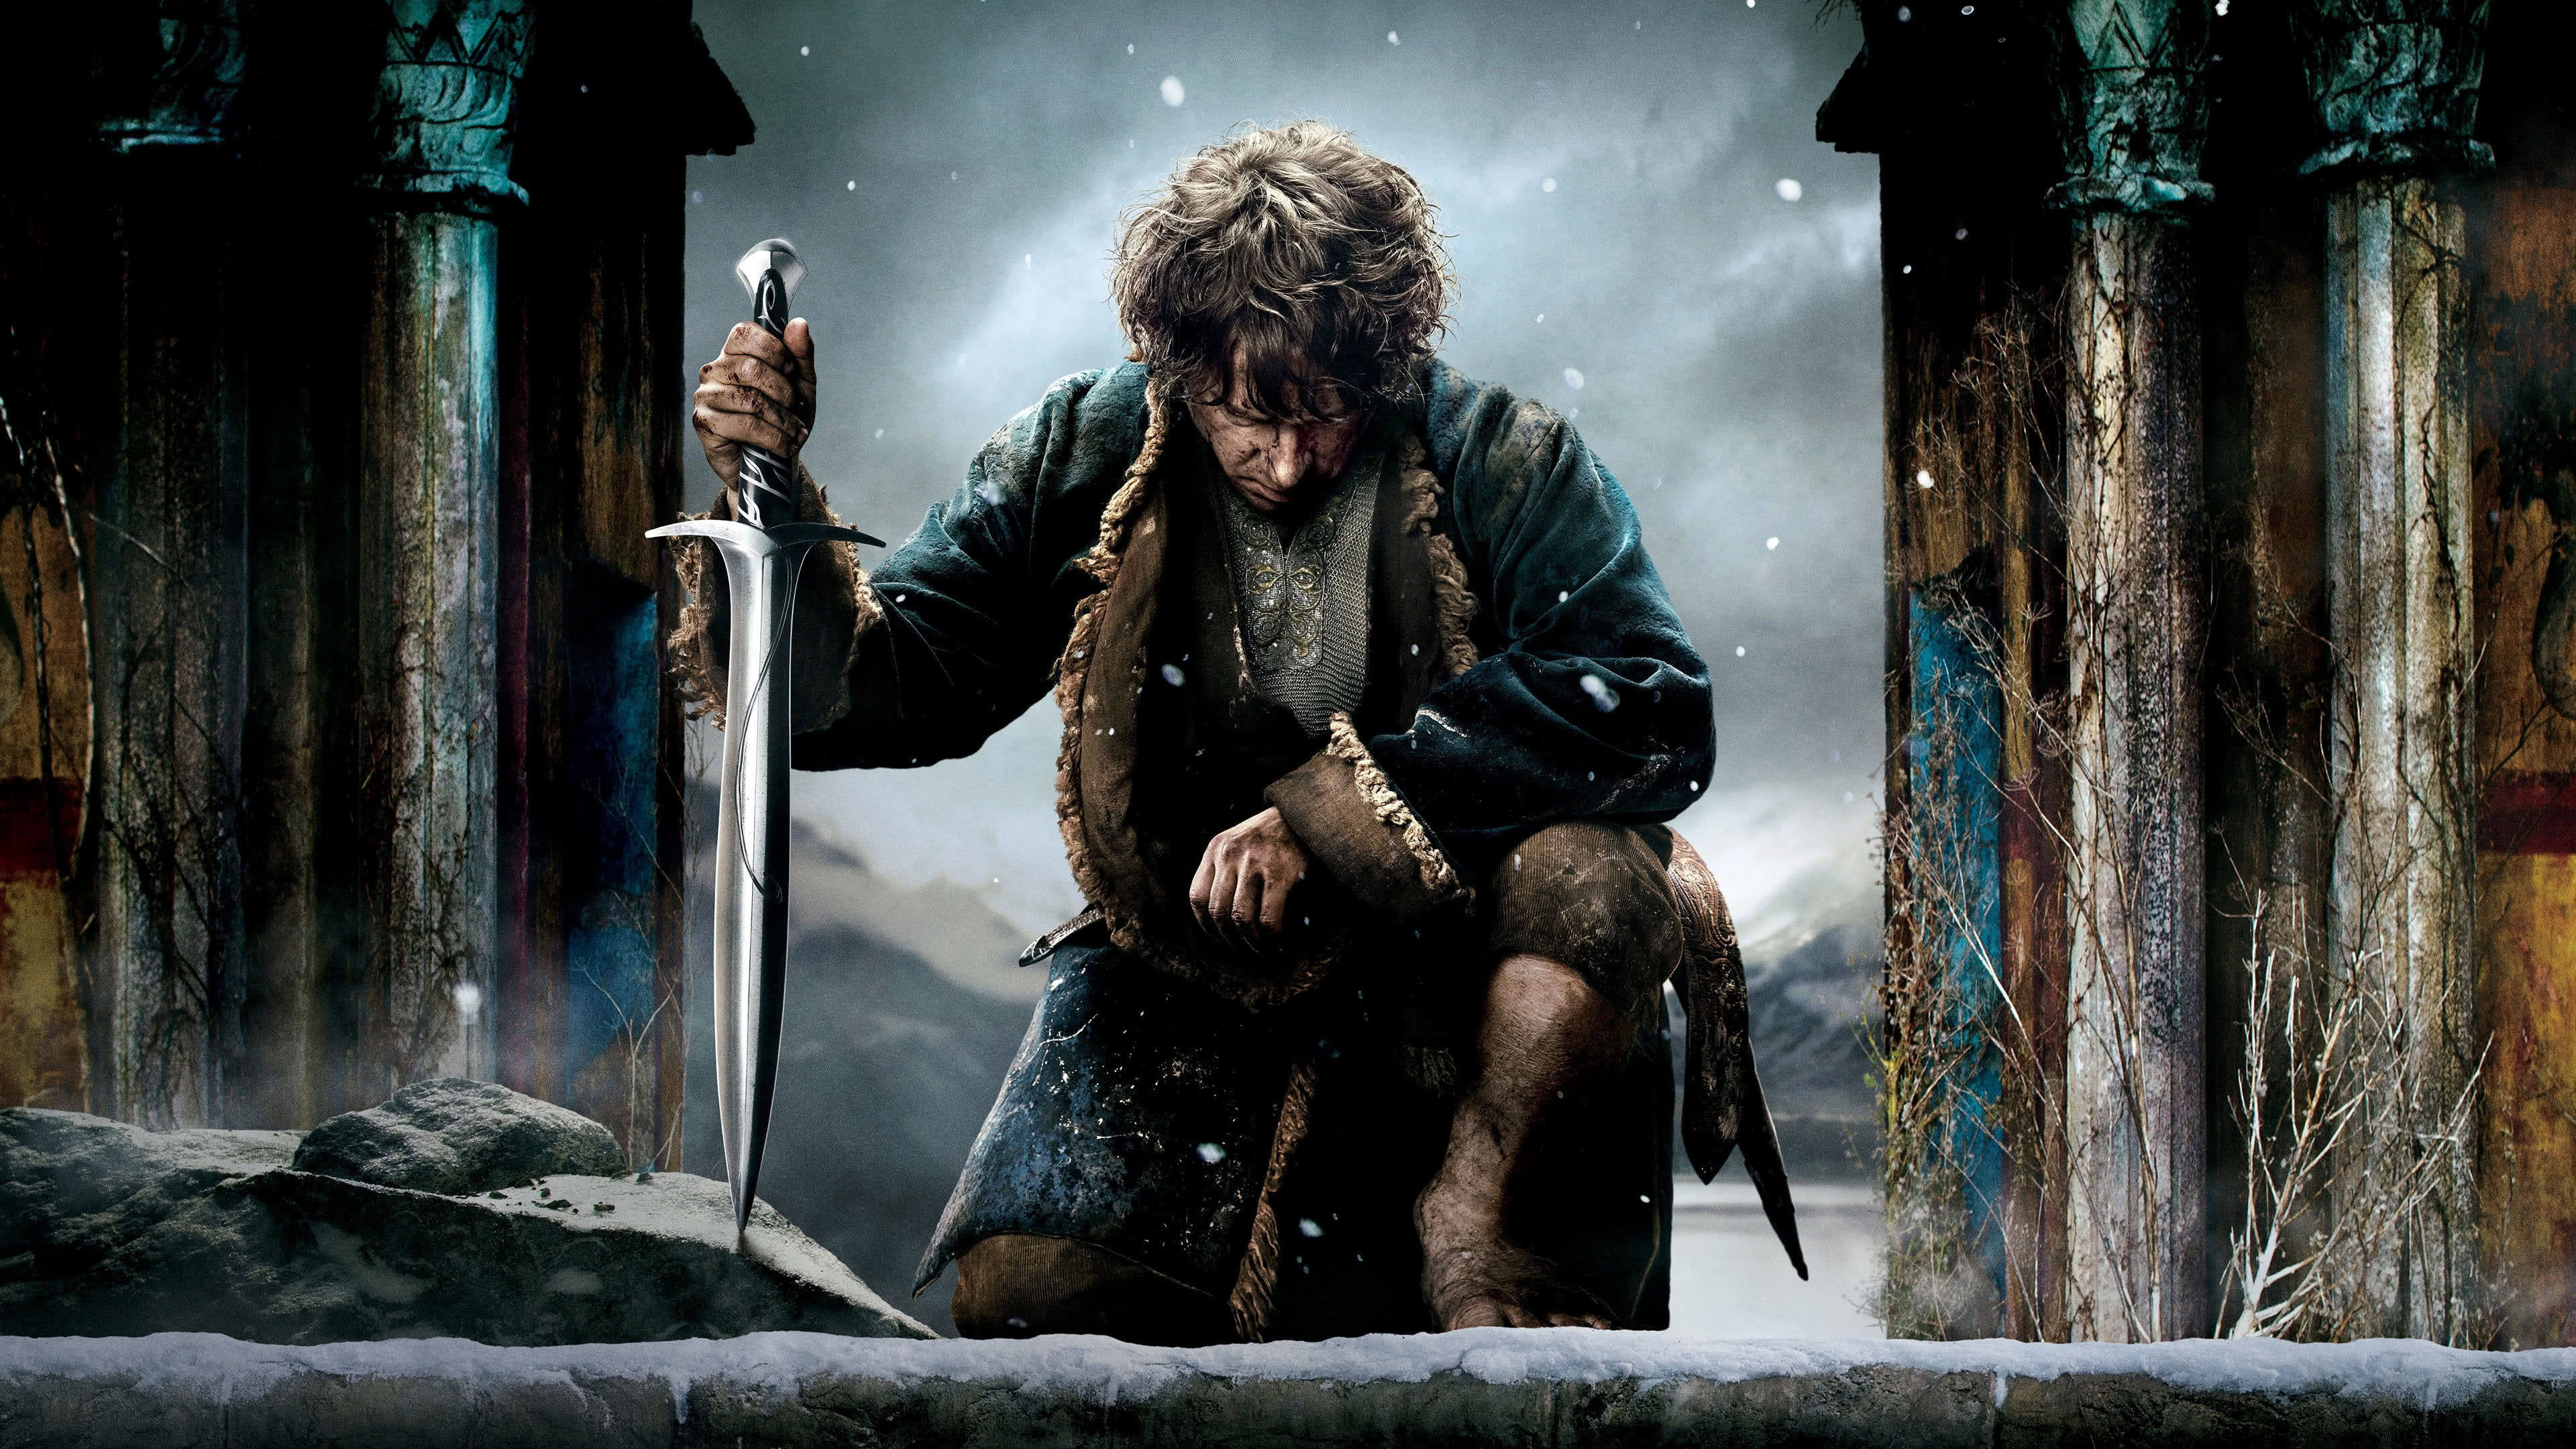 Bilbo Baggins character, Memorable wallpaper, Adventure companion, Mythical world, 3840x2160 4K Desktop